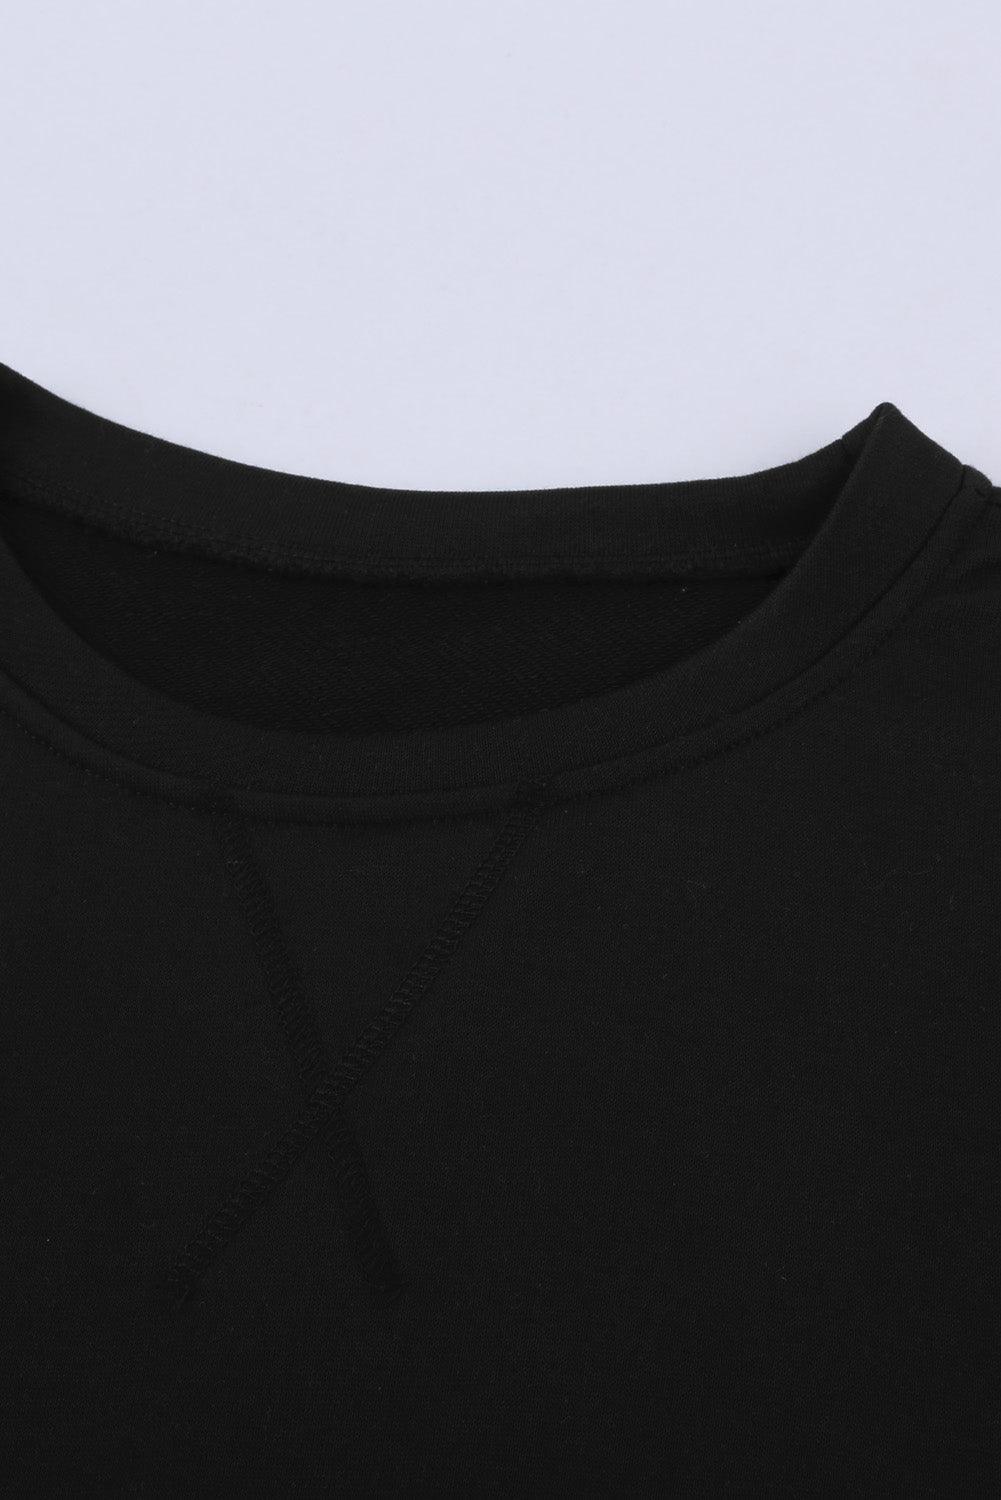 Black White Patchwork Dropped Shoulder Sleeve Sweatshirt - VirtuousWares:Global